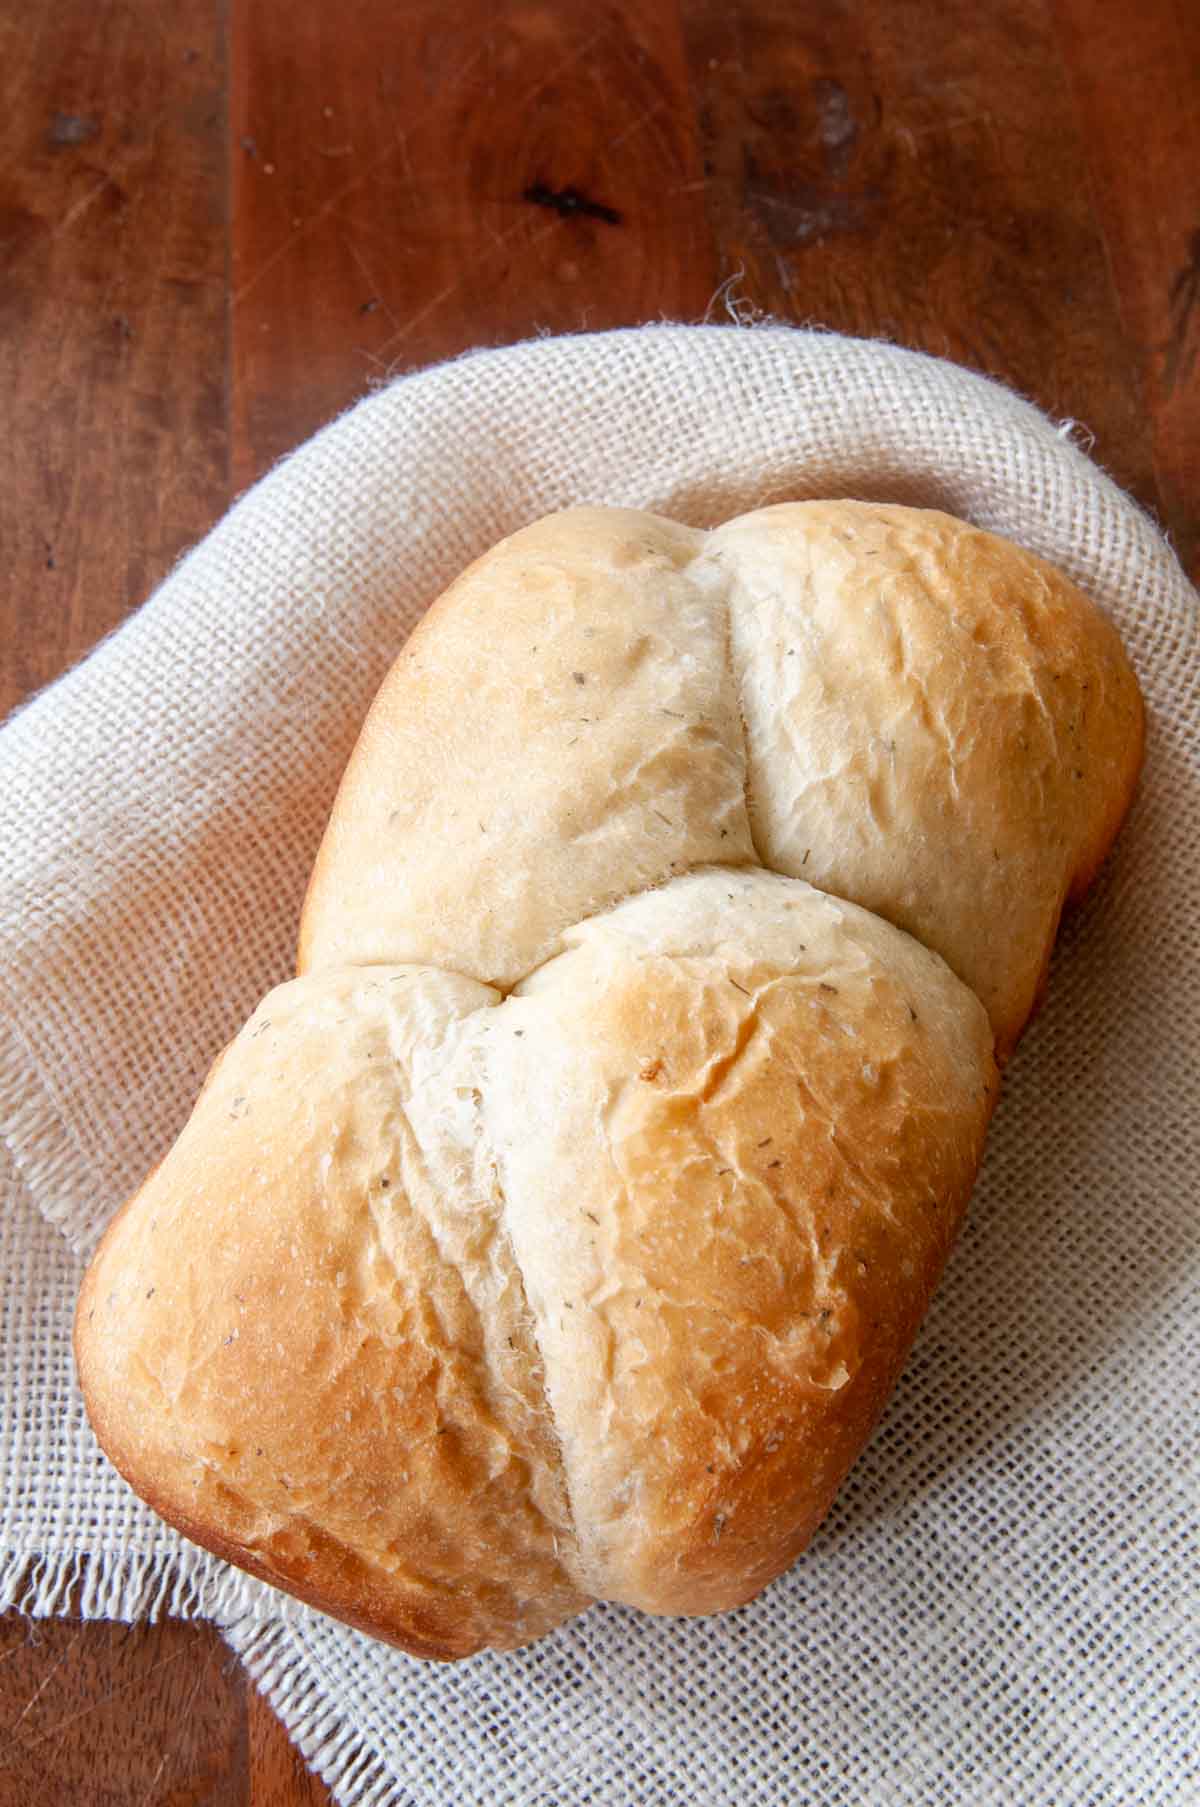 Using my KBS bread maker: Baking soft white bread success 